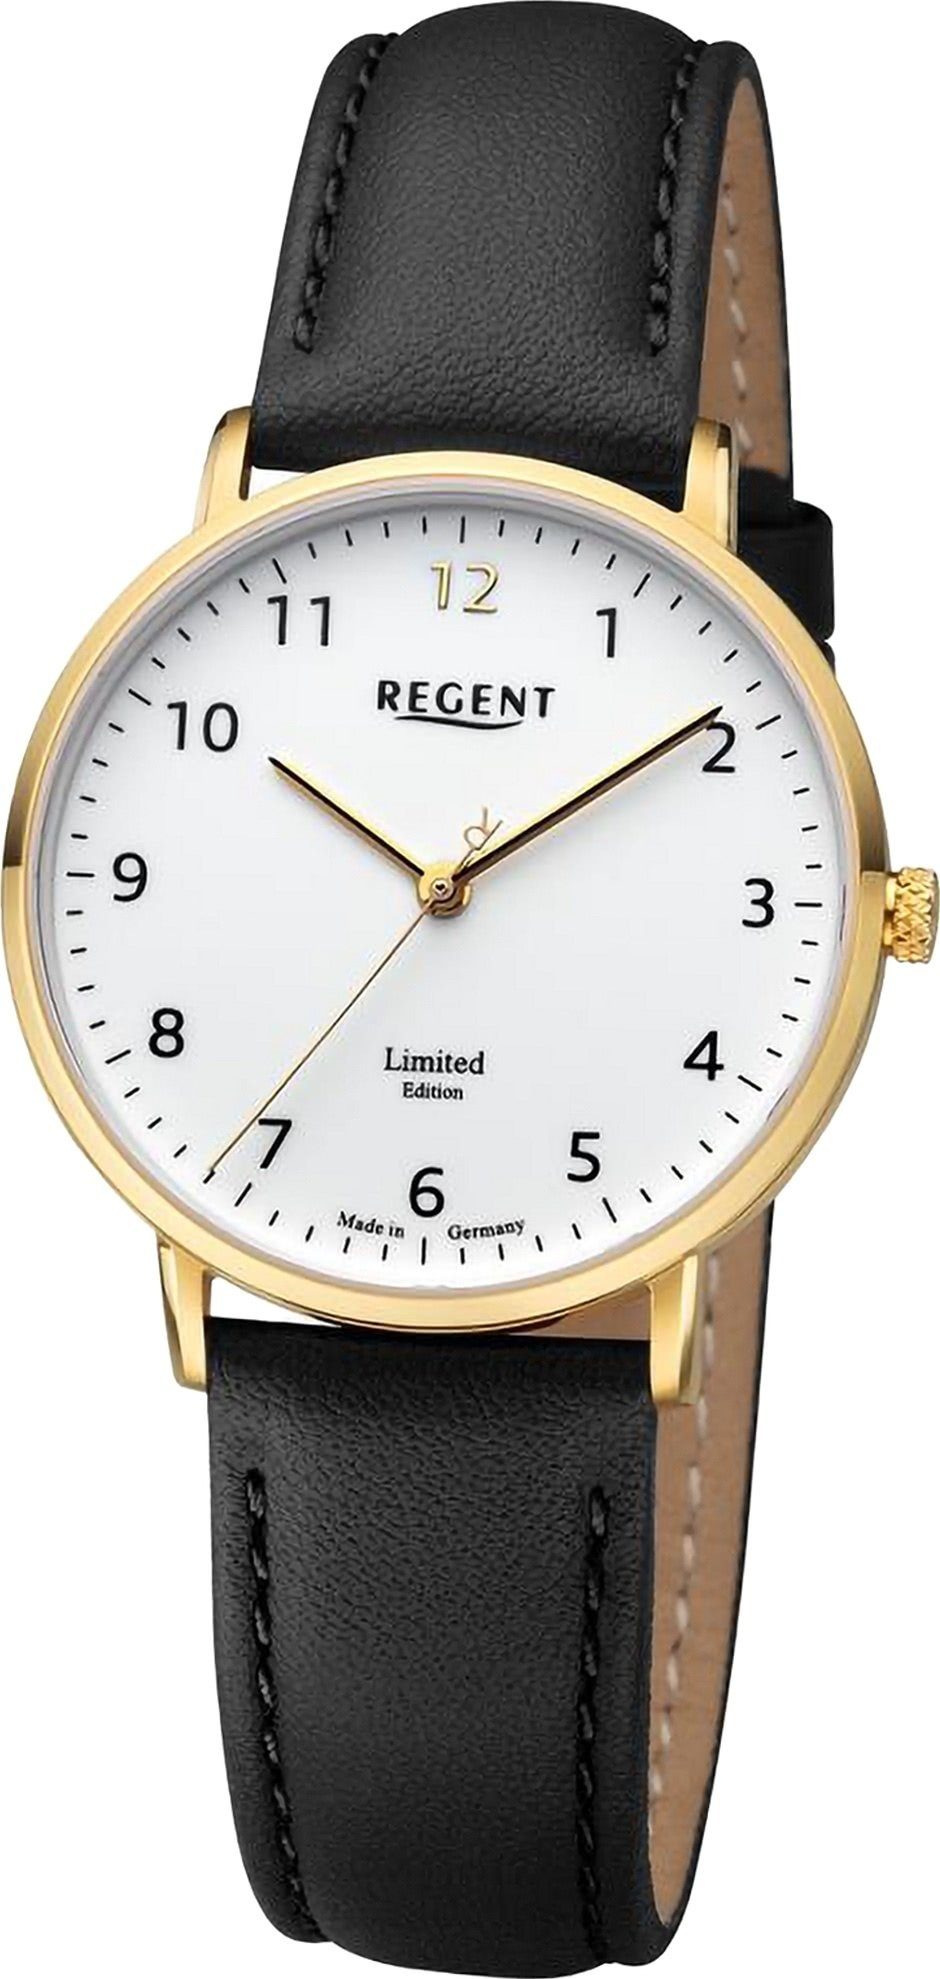 Armbanduhr groß Lederarmband 32mm), Quarzuhr Damen Regent (ca. Armbanduhr rund, extra Regent Analog, Damen